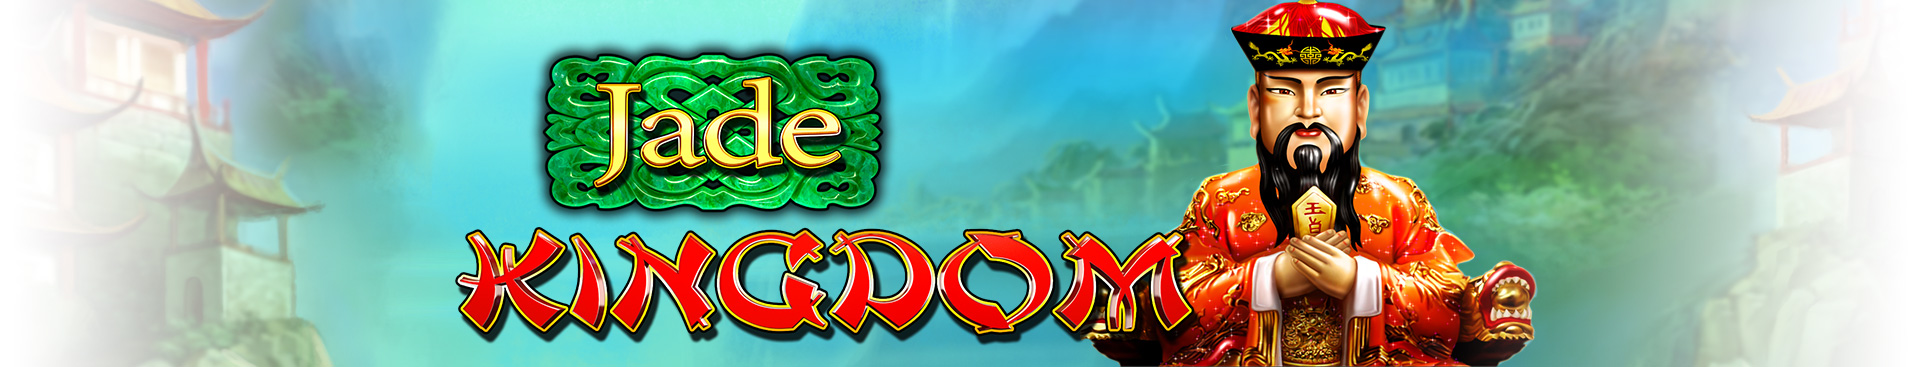 Jade Kingdom 